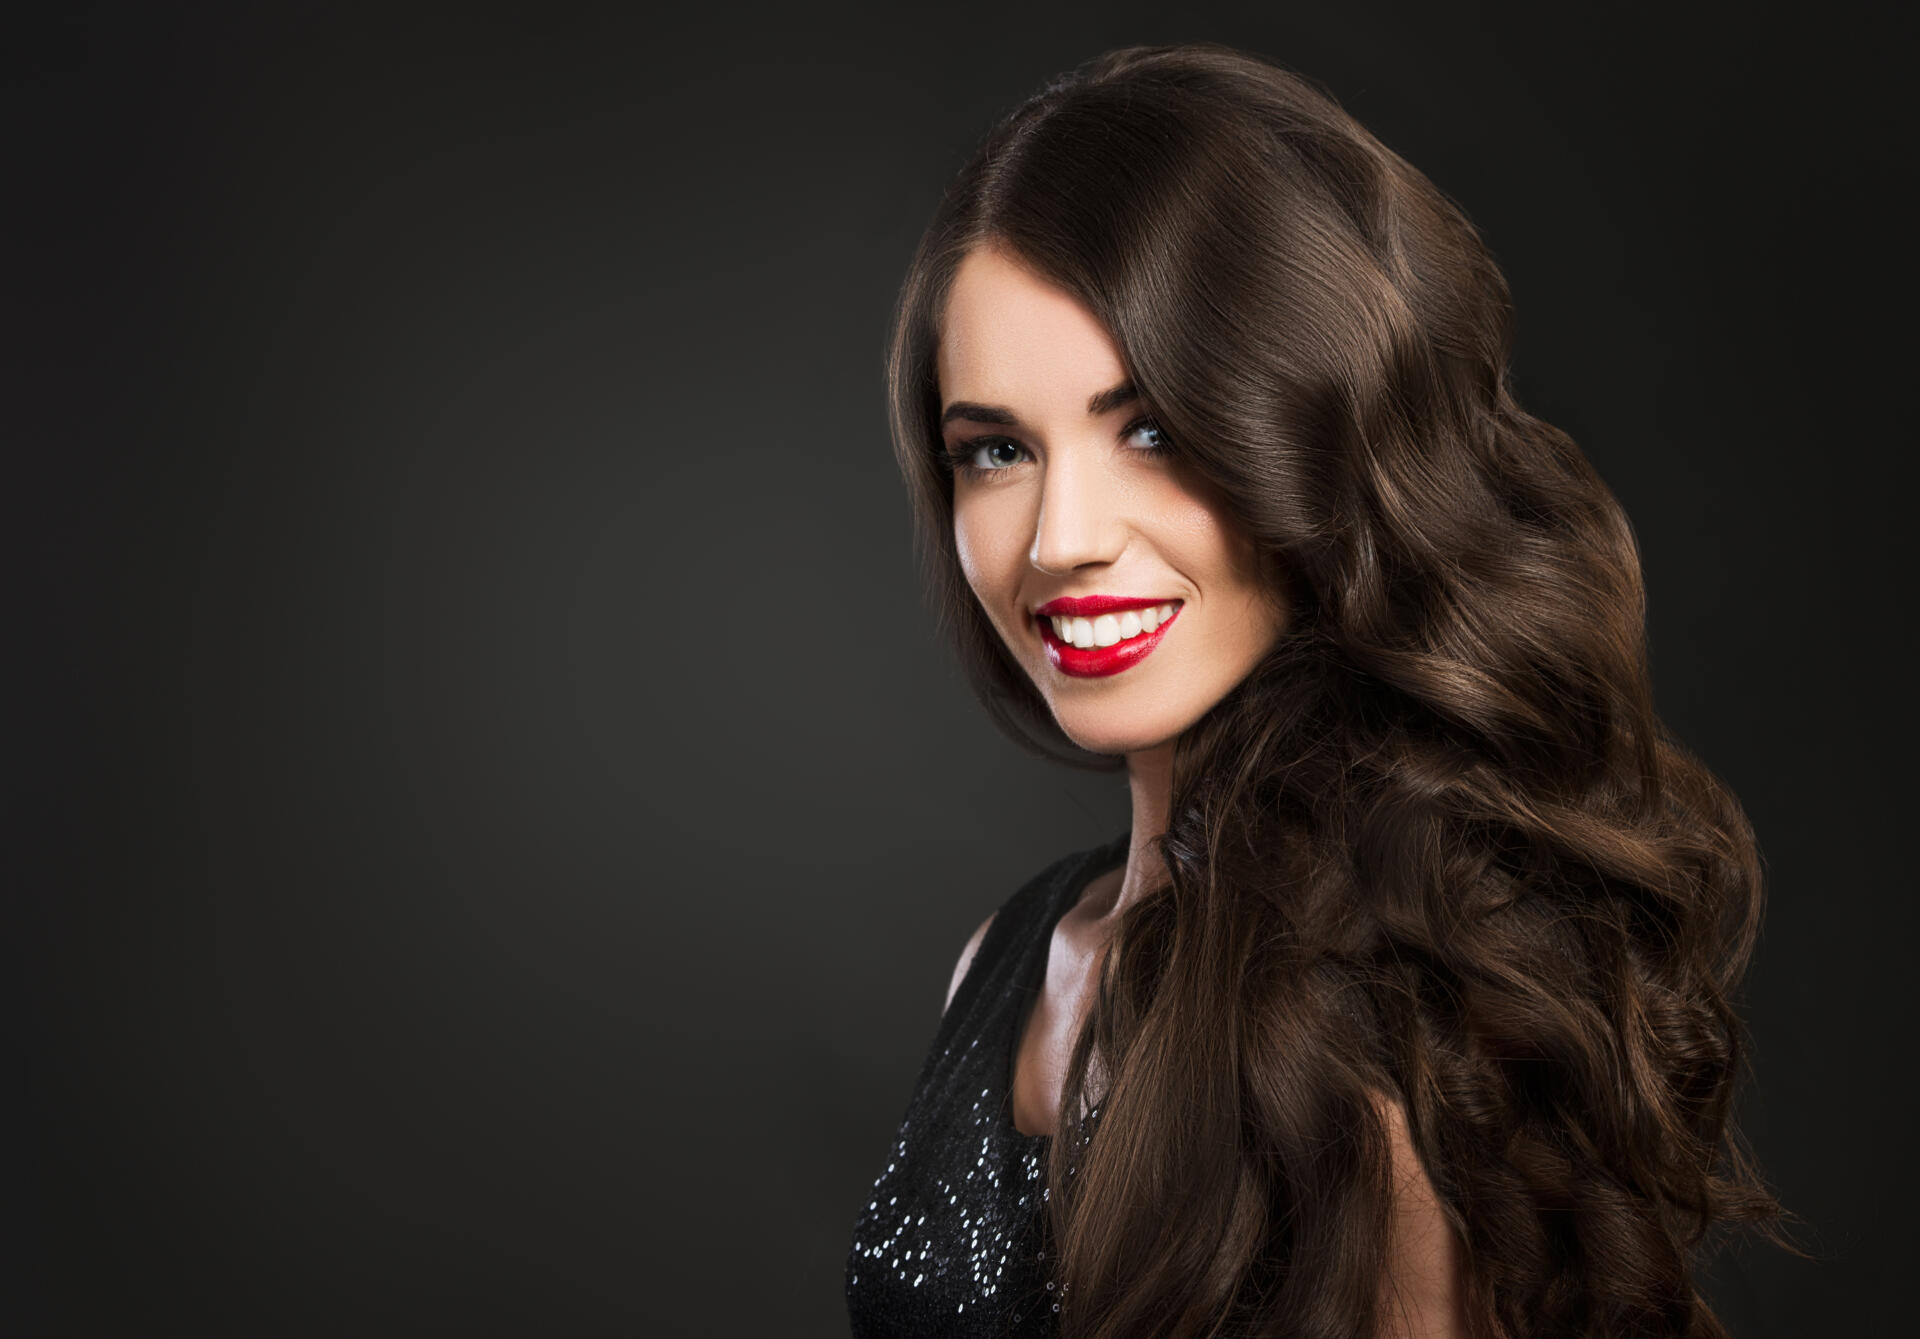 Beautiful woman smiling, glamour portrait on dark background